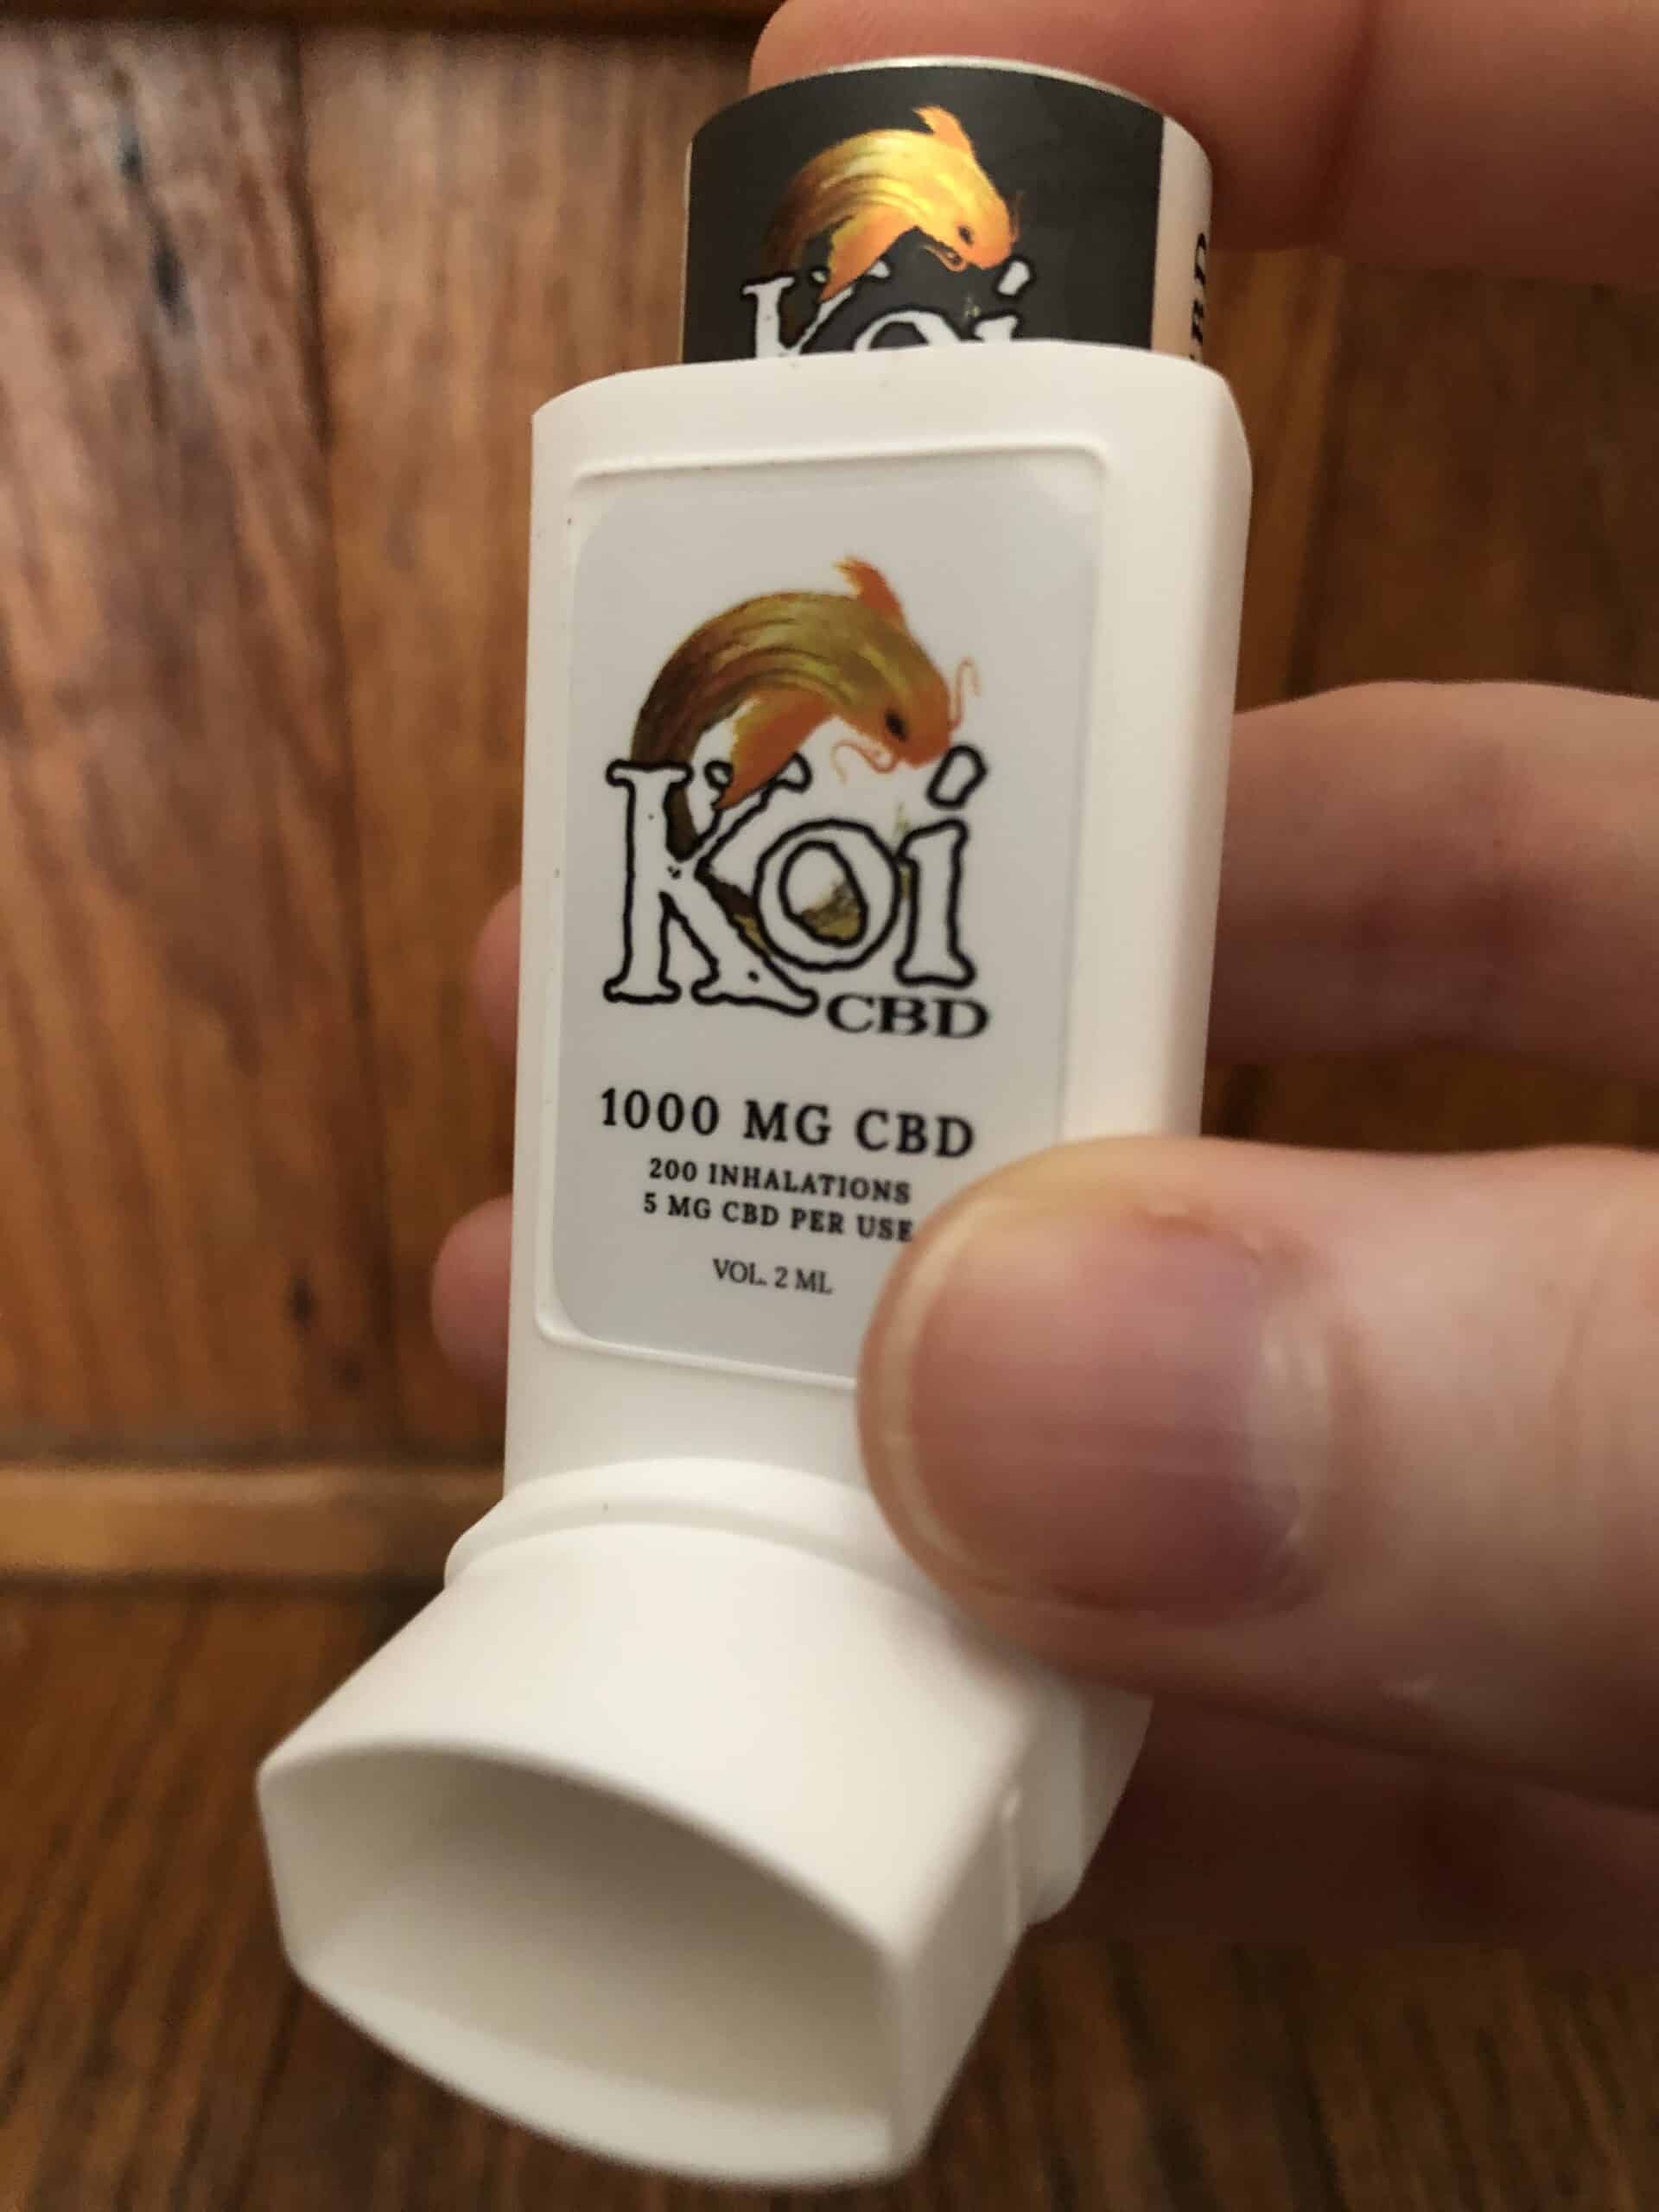 koi hemp extract cbd inhaler dreamsicle review save on cannabis testing process